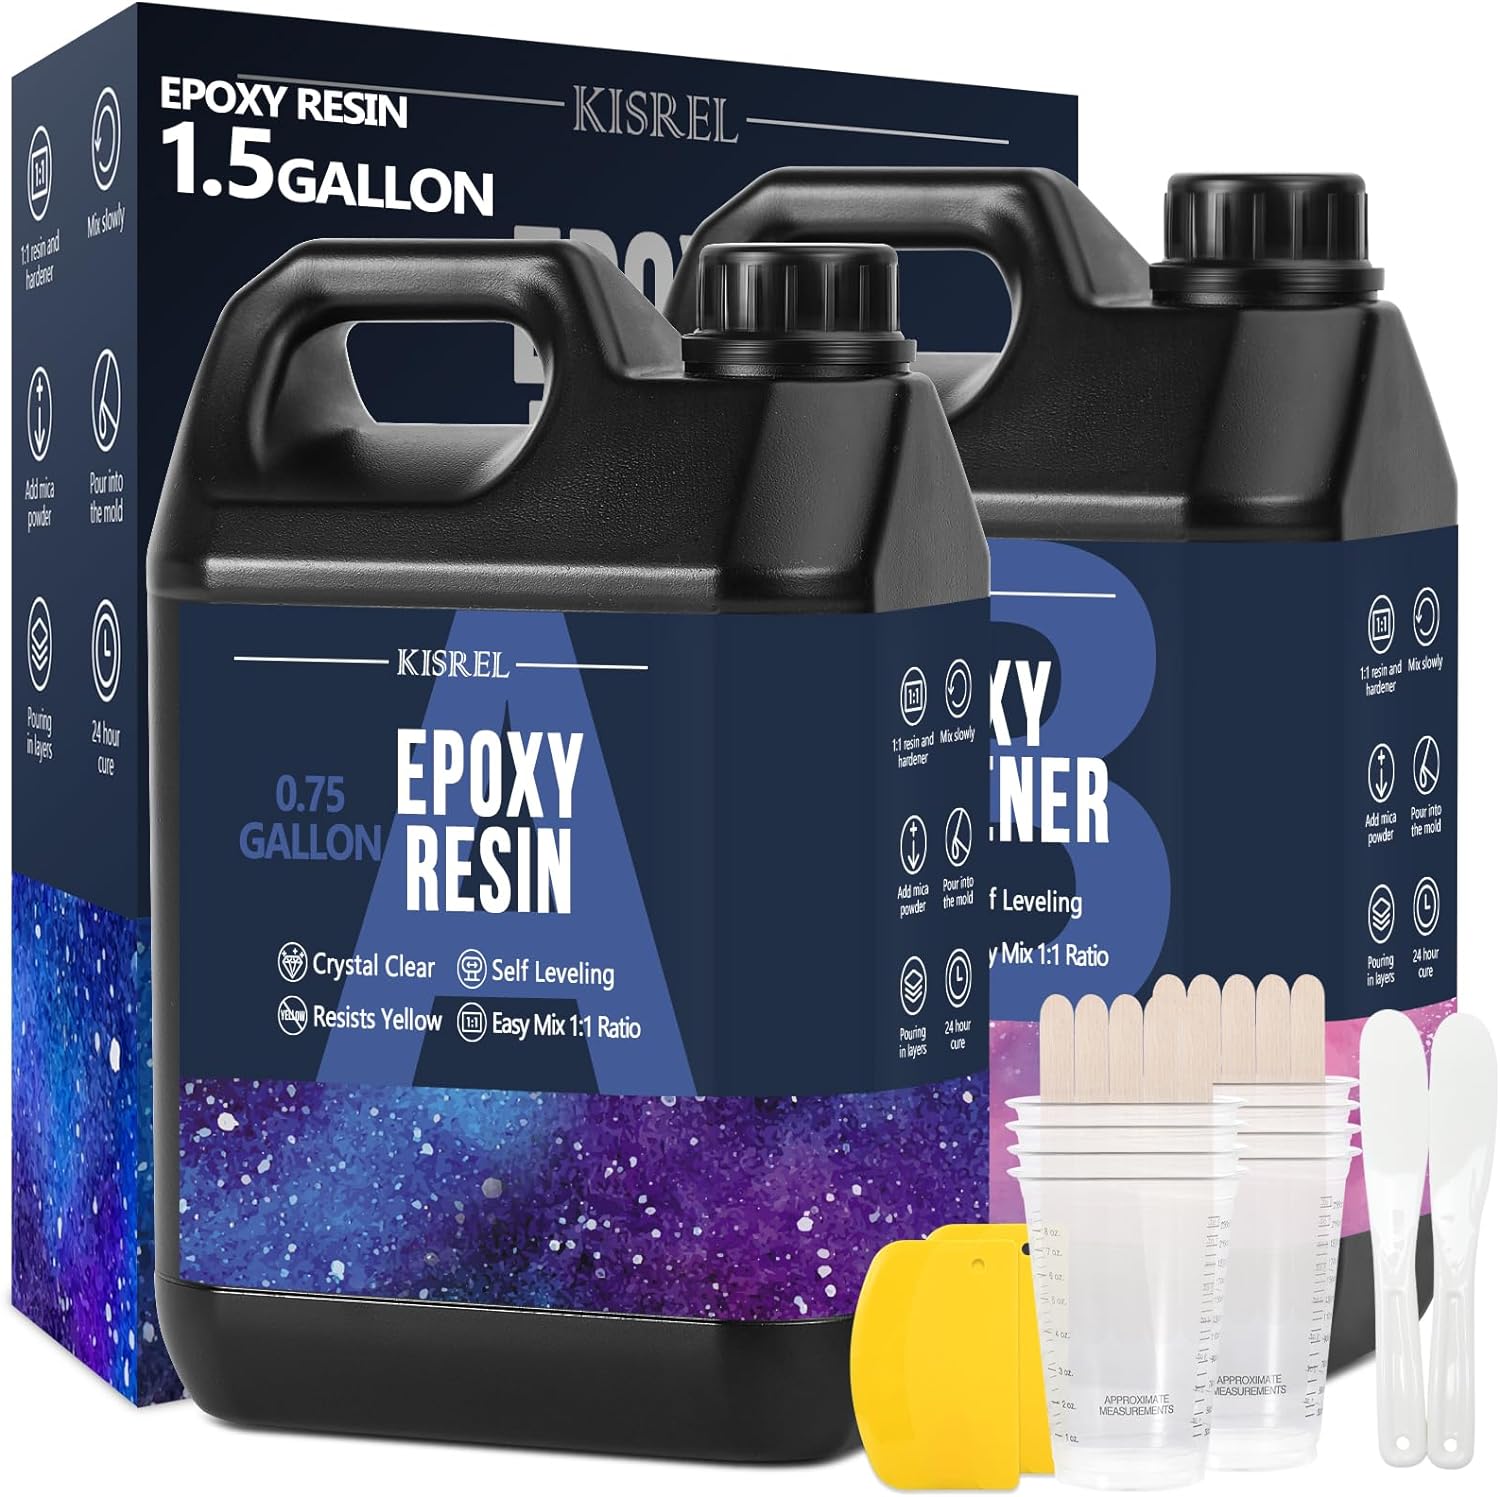 KISREL Epoxy Resin 1.5Gallon - Crystal Clear Epoxy Resin Kit - No